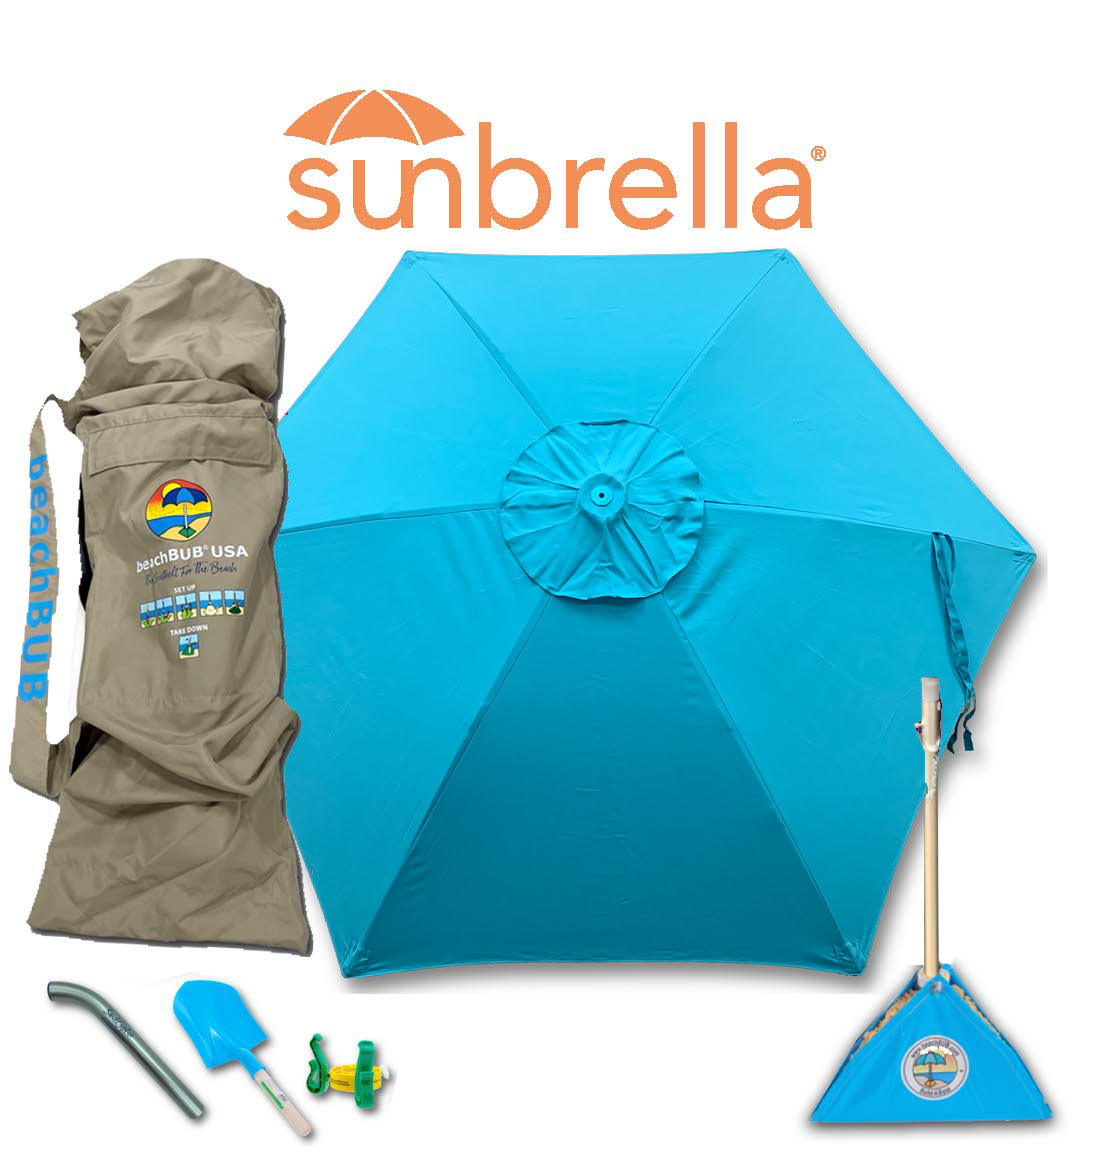 beachBUB® All-In-One Beach Umbrella System - Sunbrella Model